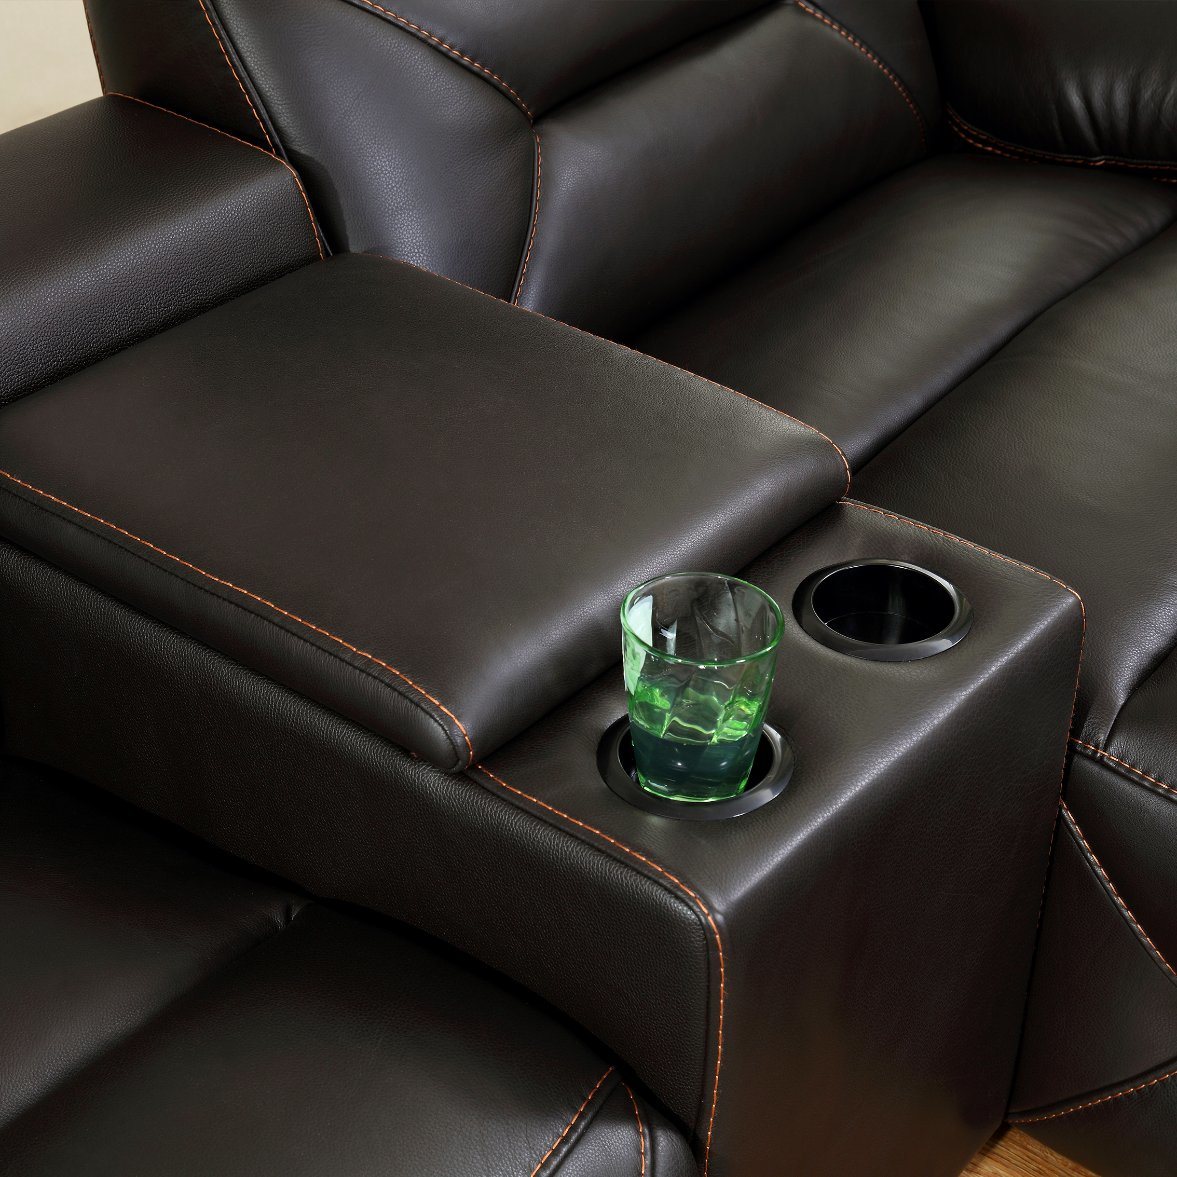 2022 Hot Sale Home Furniture Functional Recliner Sofa